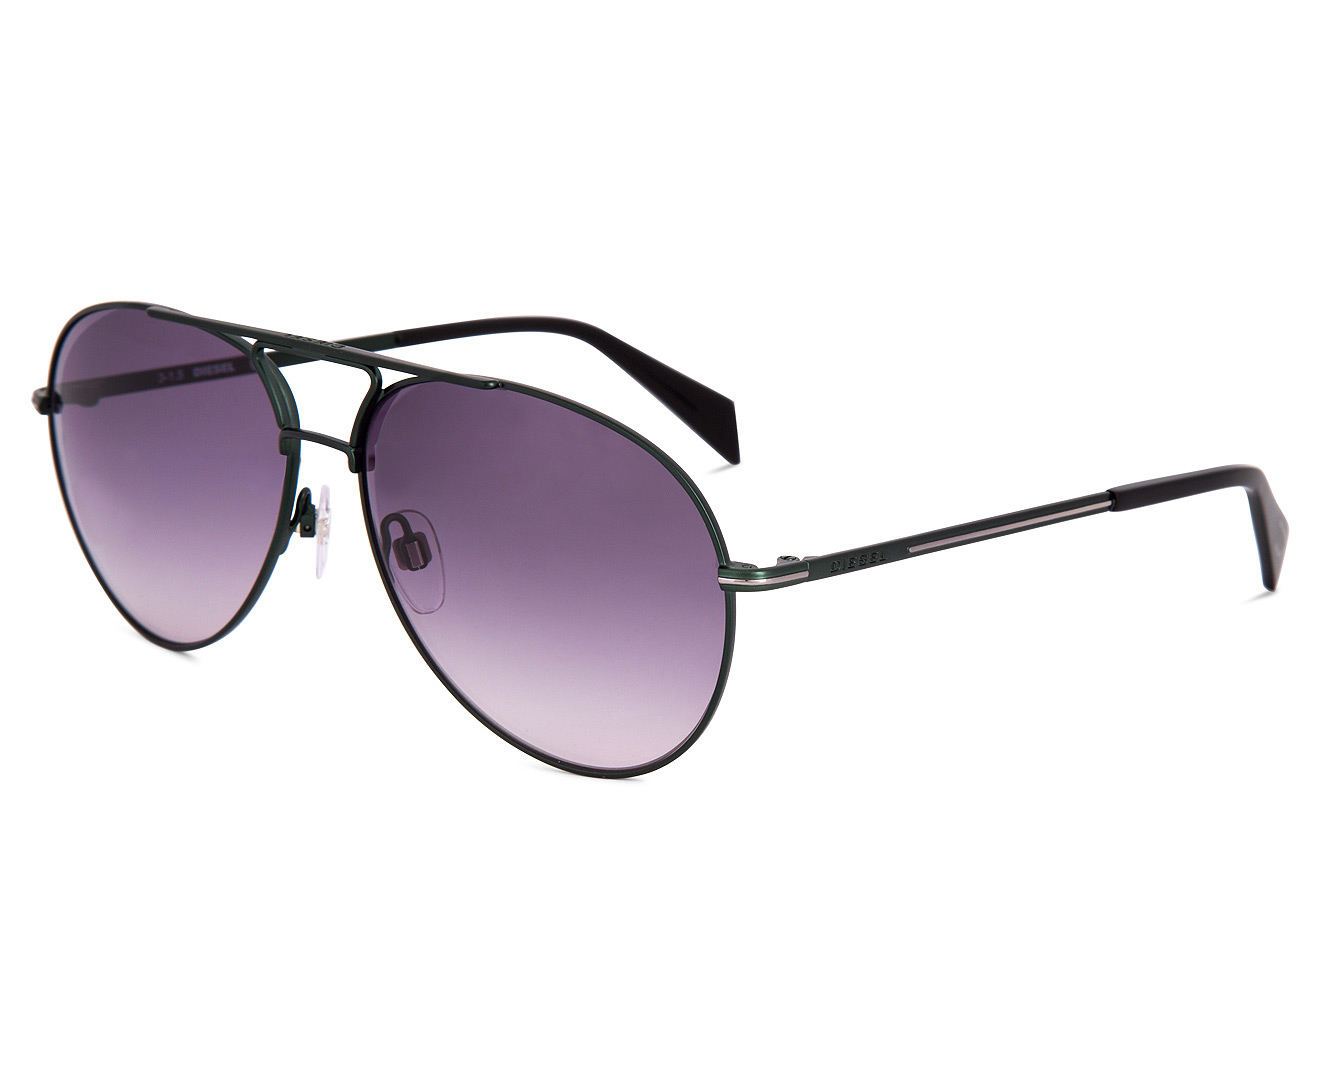 Diesel Men's Thin Aviator Sunglasses - Green/Purple